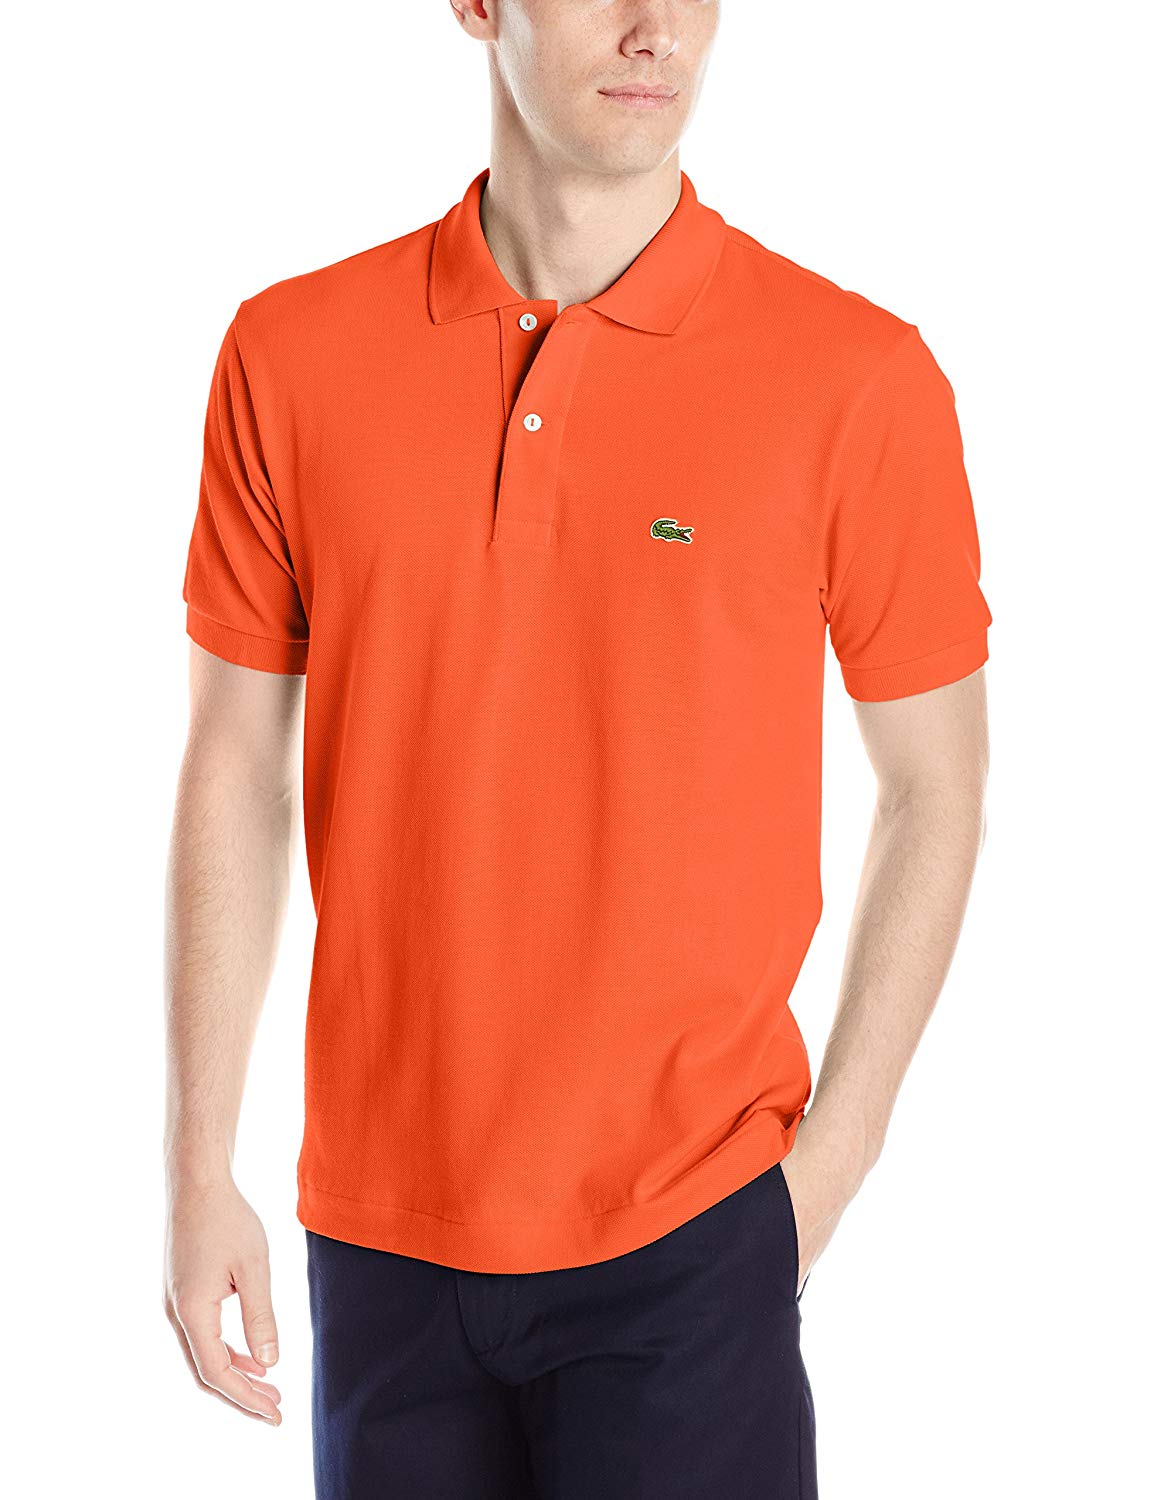 Lacoste Classic Pique Short Sleeve Polo Shirt